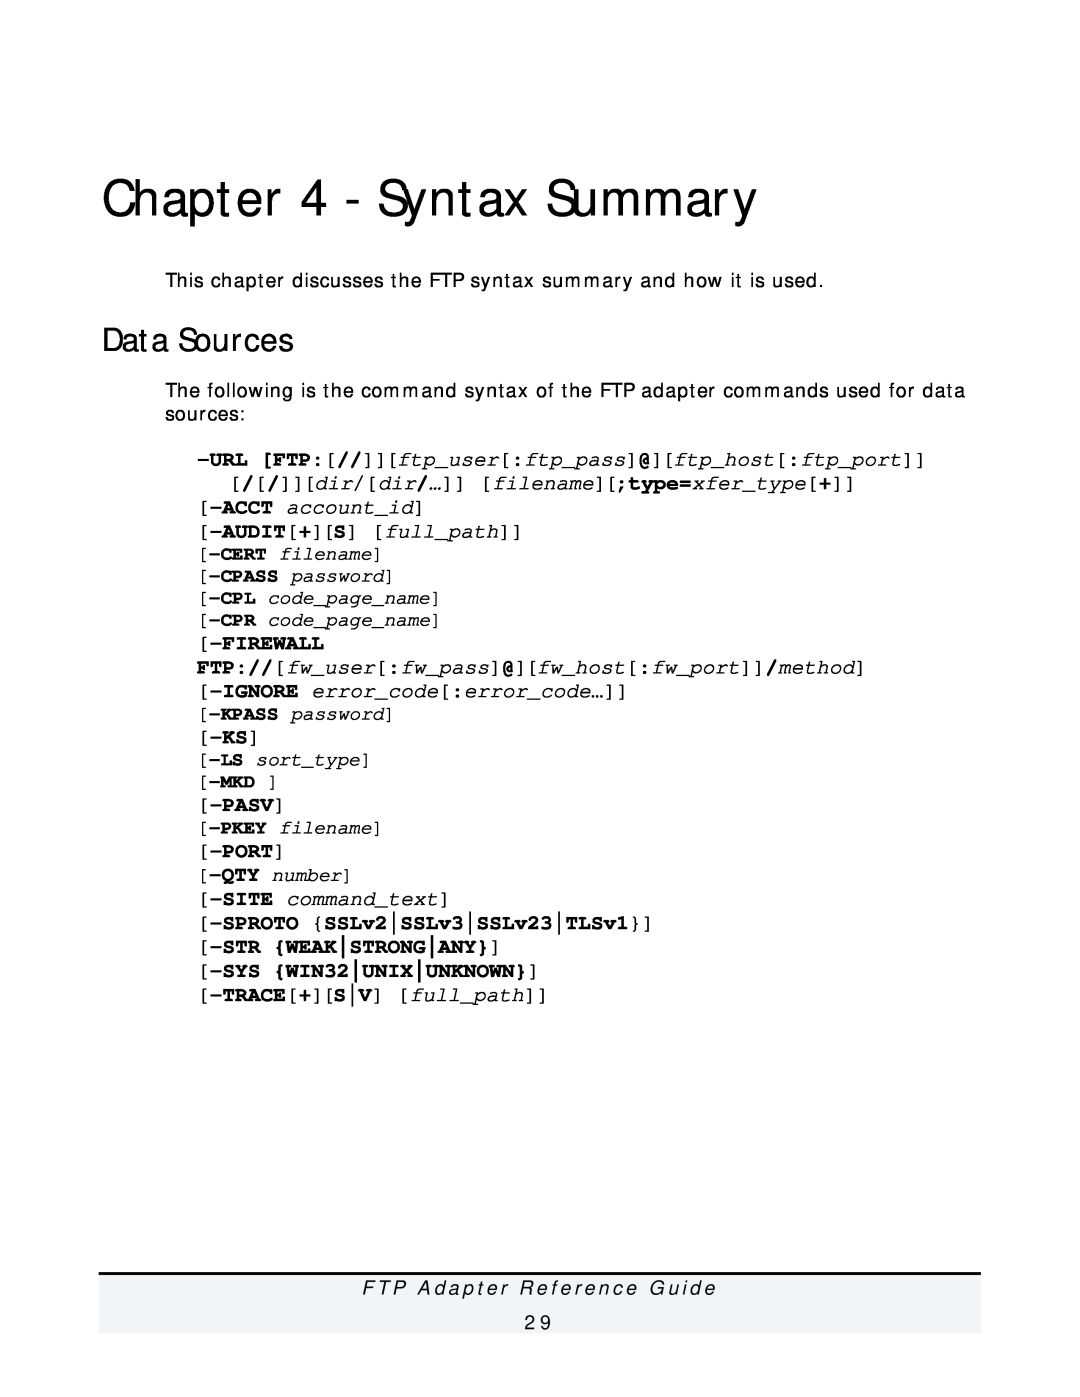 IBM FTP Adapter manual Syntax Summary, Data Sources, FTP//fwuserfwpass@fwhostfwport/method IGNORE errorcodeerrorcode… 